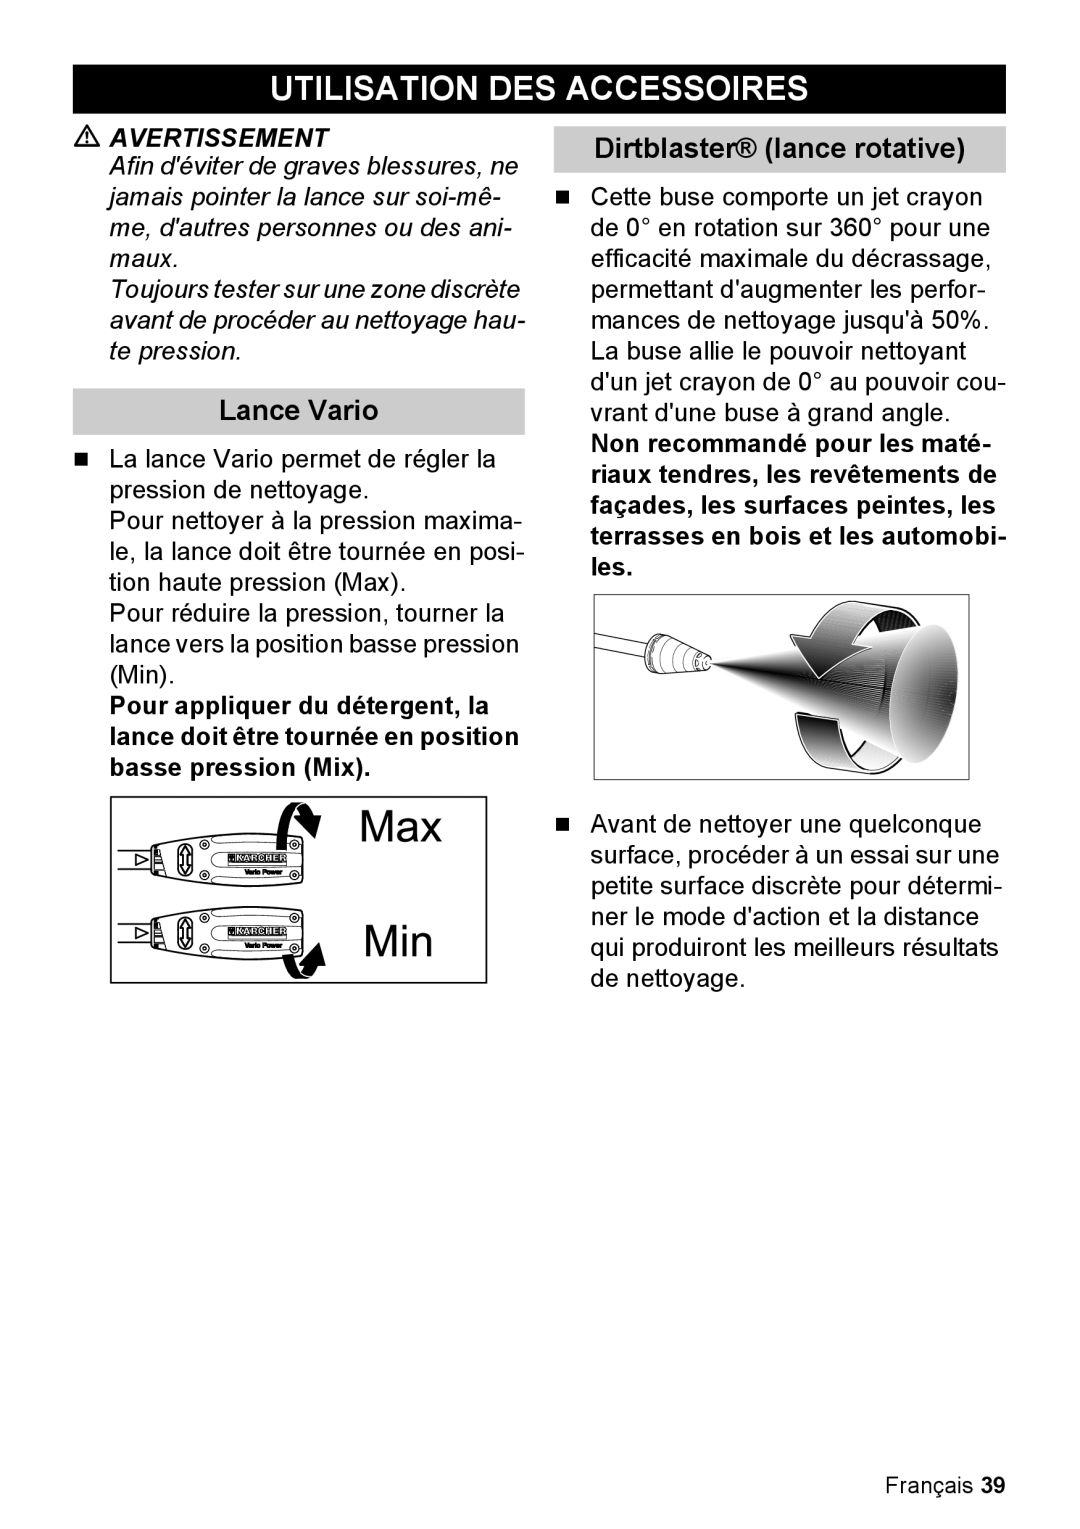 Karcher K 2.050 manual Utilisation Des Accessoires, Lance Vario, Dirtblaster lance rotative, Avertissement 